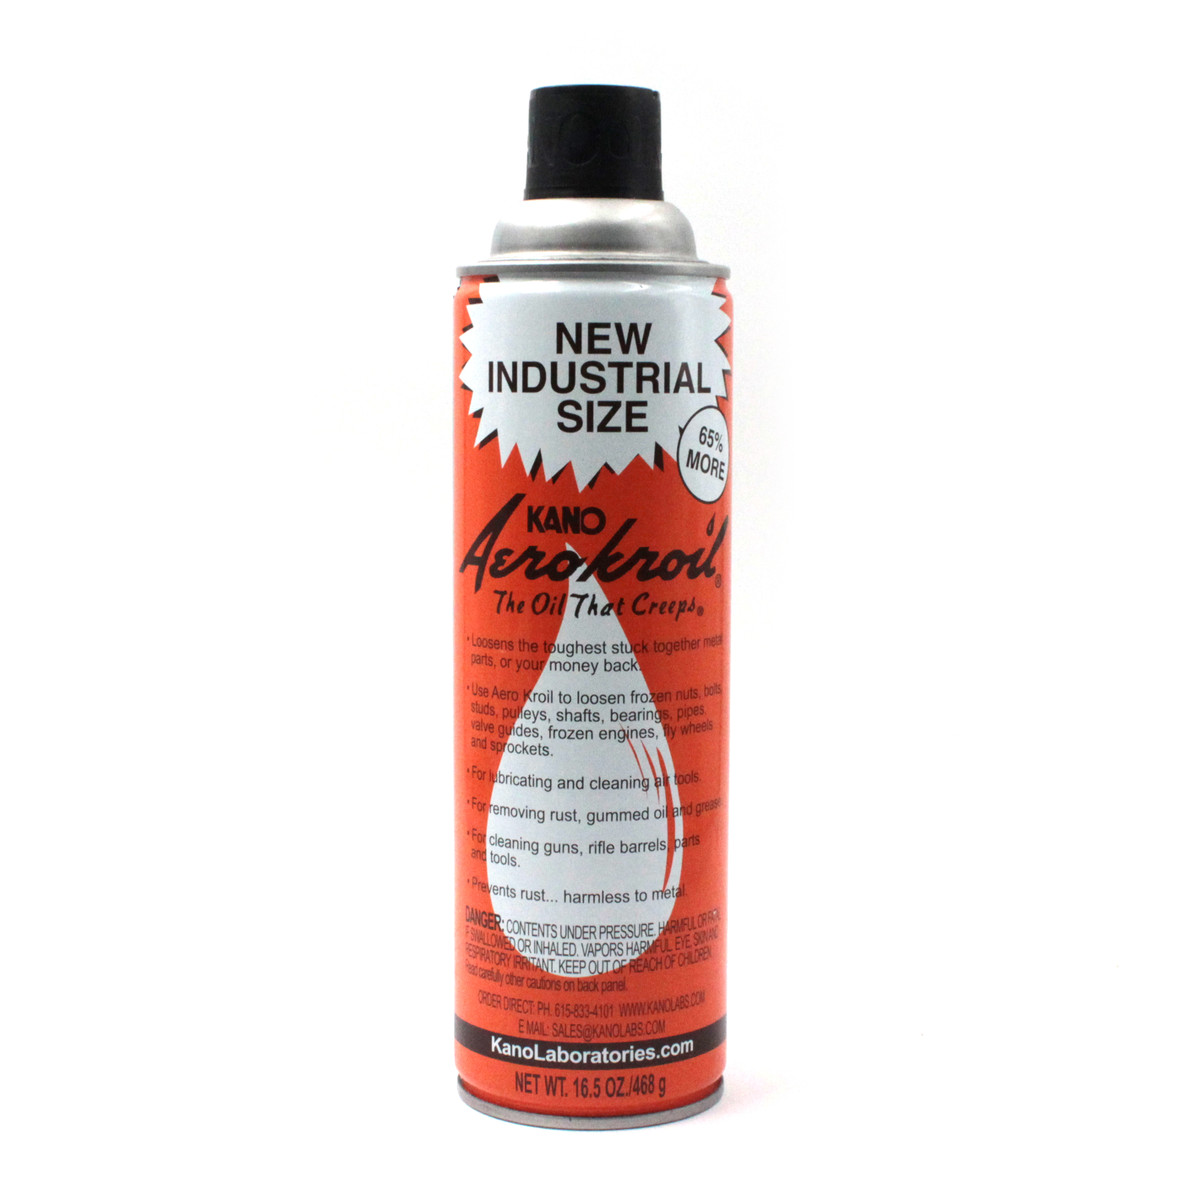 Americana Spray Sealers @ Raw Materials Art Supplies